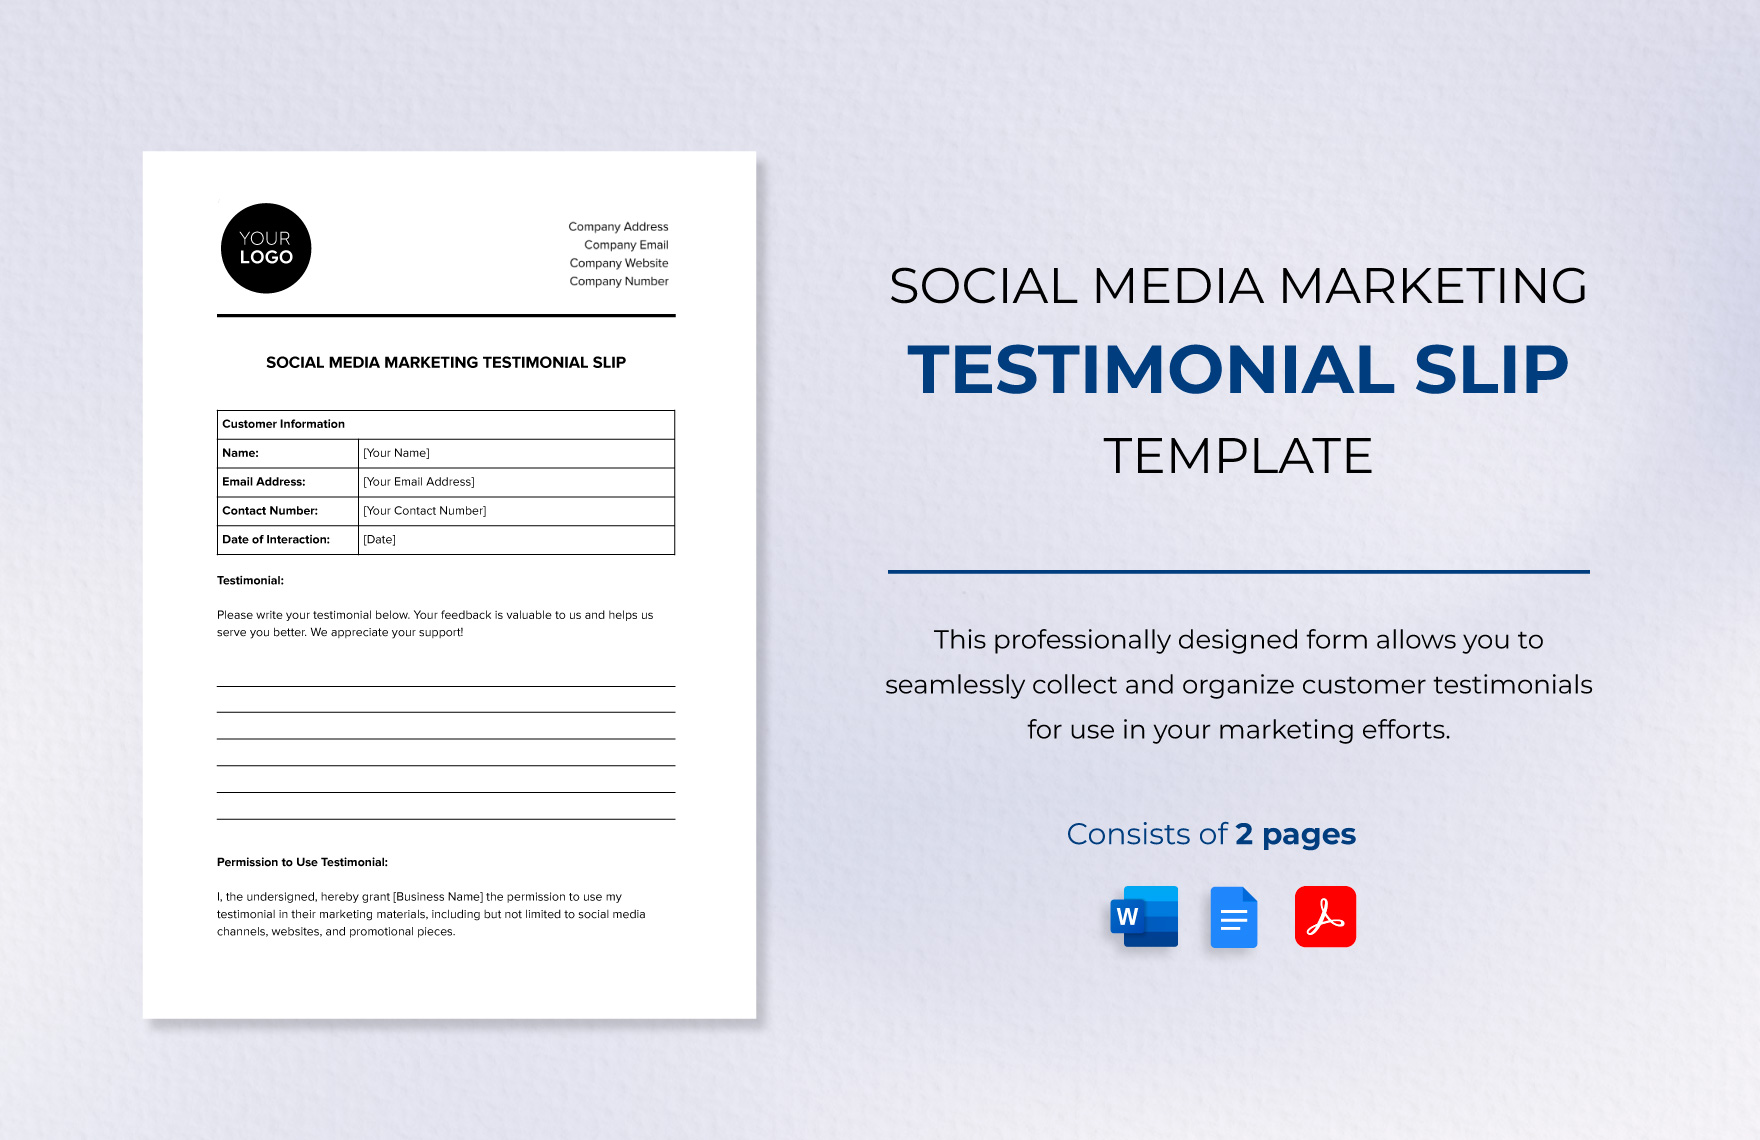 Social Media Marketing Testimonial Slip Template in Word, Google Docs, PDF